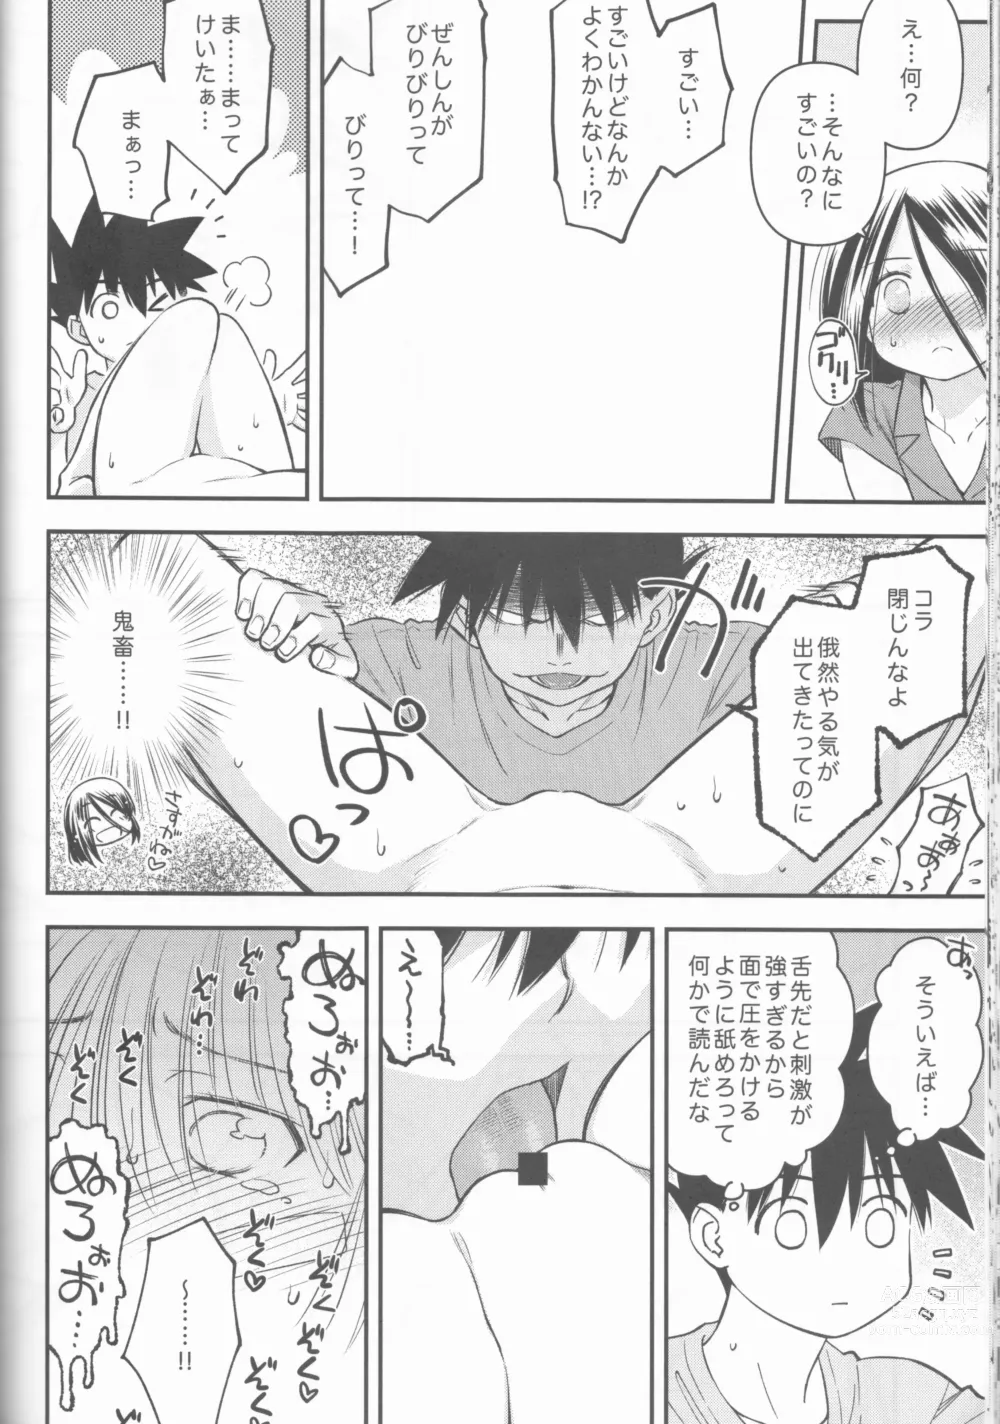 Page 57 of doujinshi kxs.